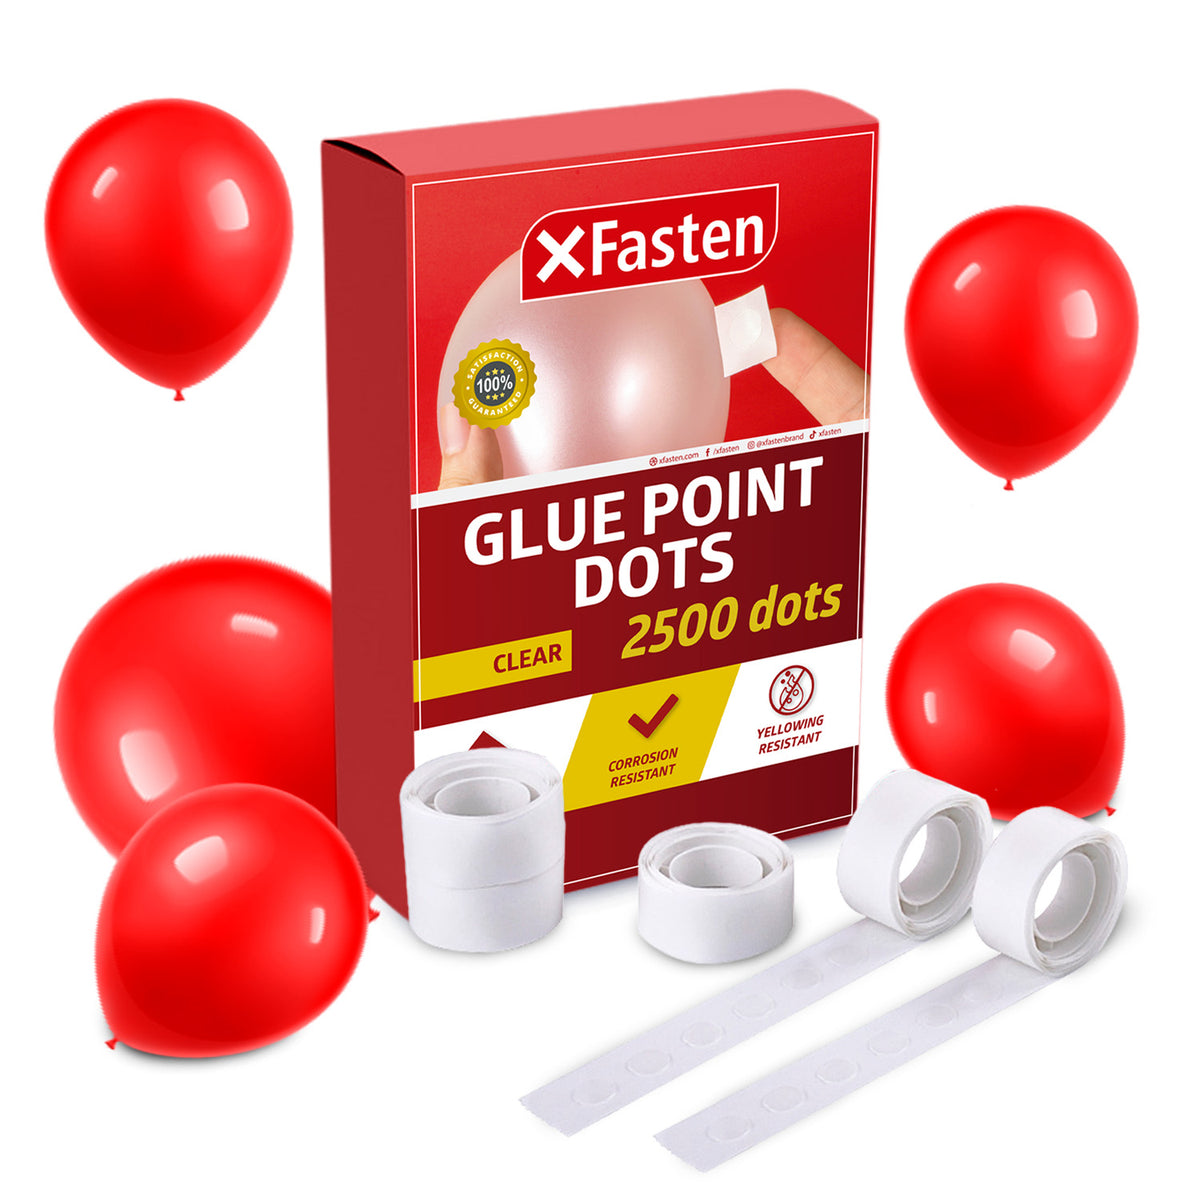 100pcs Glue Dots for Balloons / 1pack-100pcs BALLOON GLUE DOTS /DIY  DECORATION MATERIALS